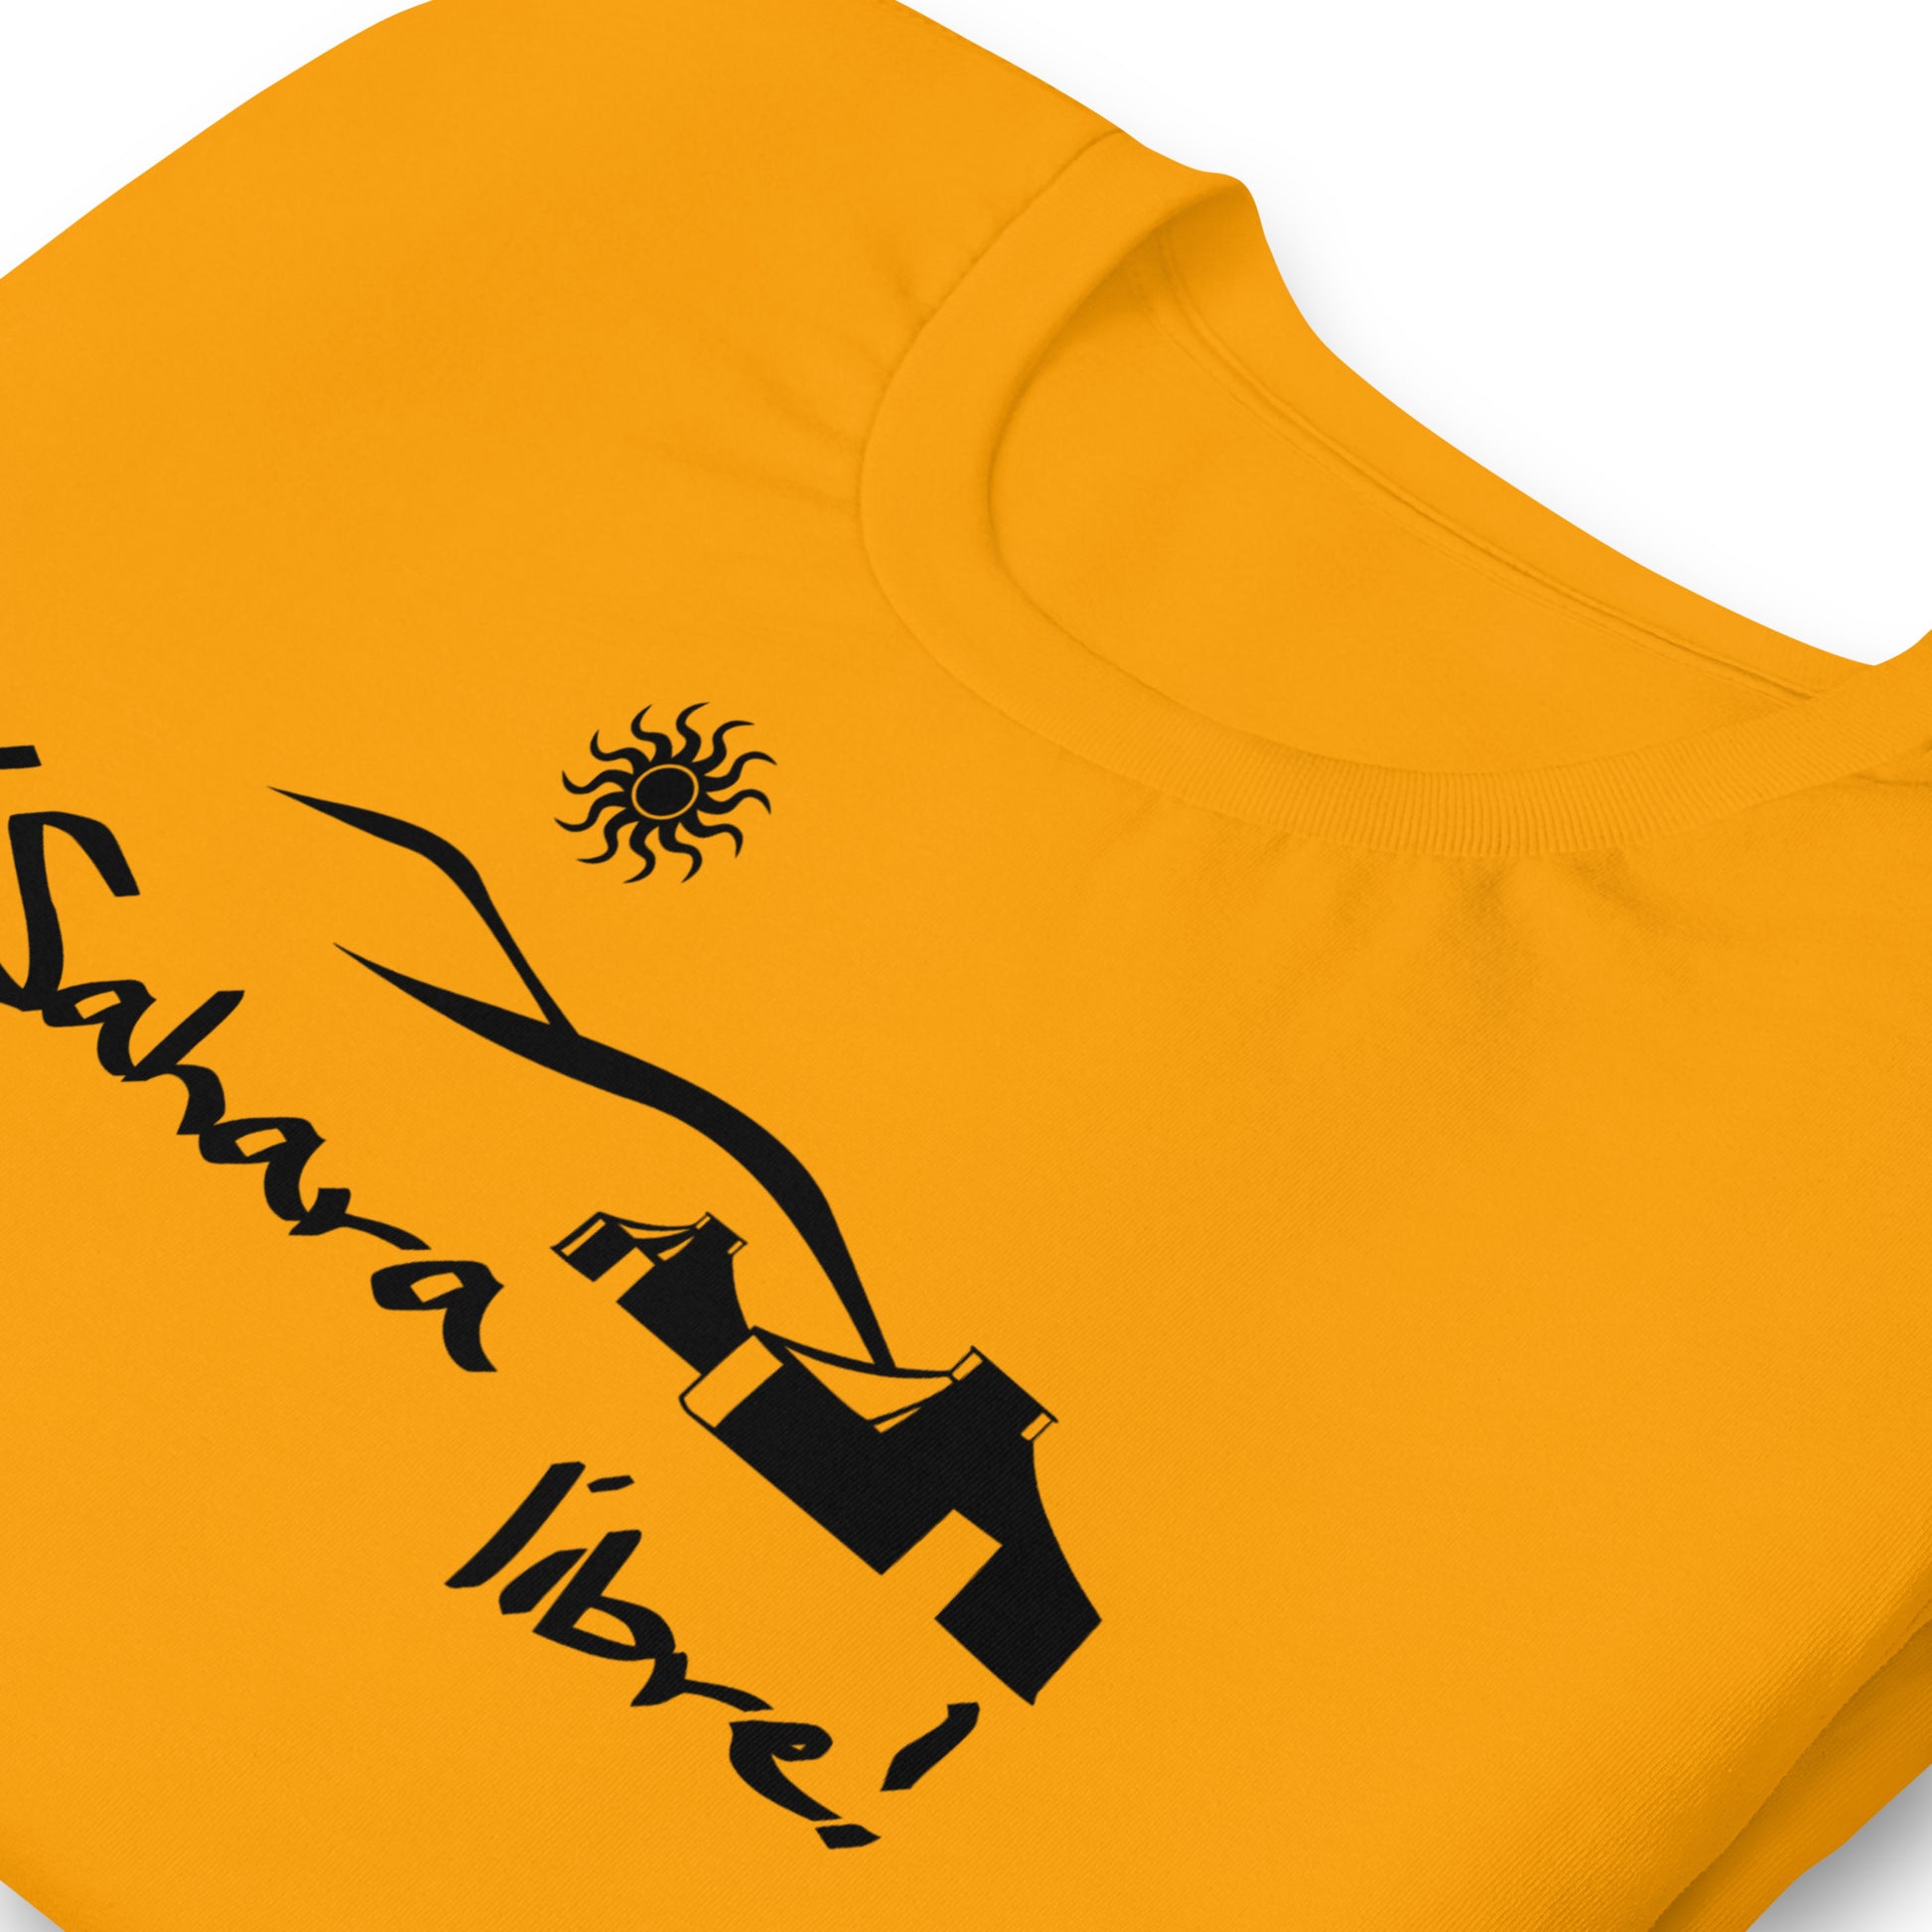 Camiseta Sáhara Libre